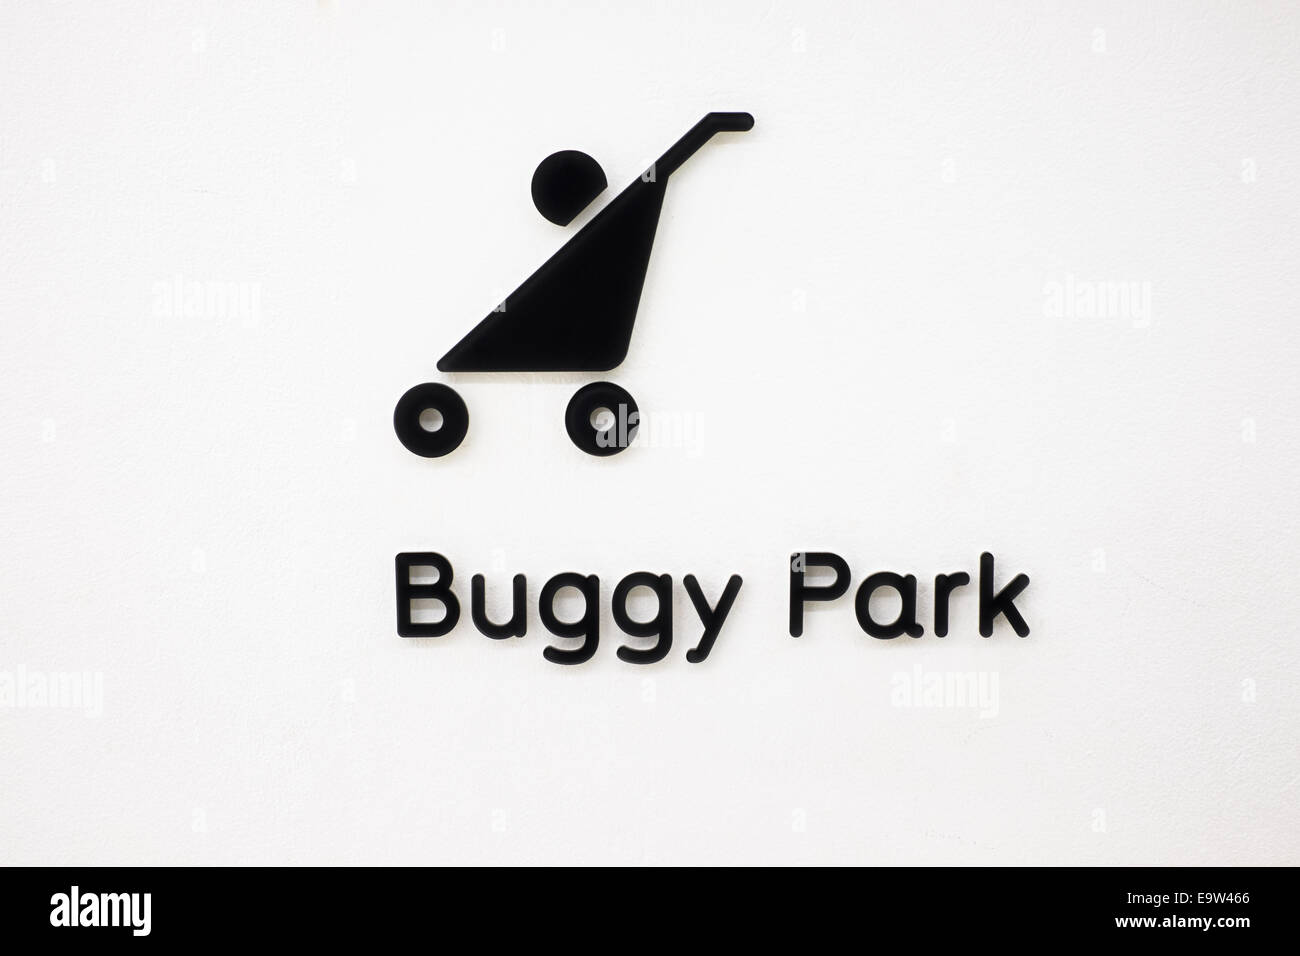 buggy park